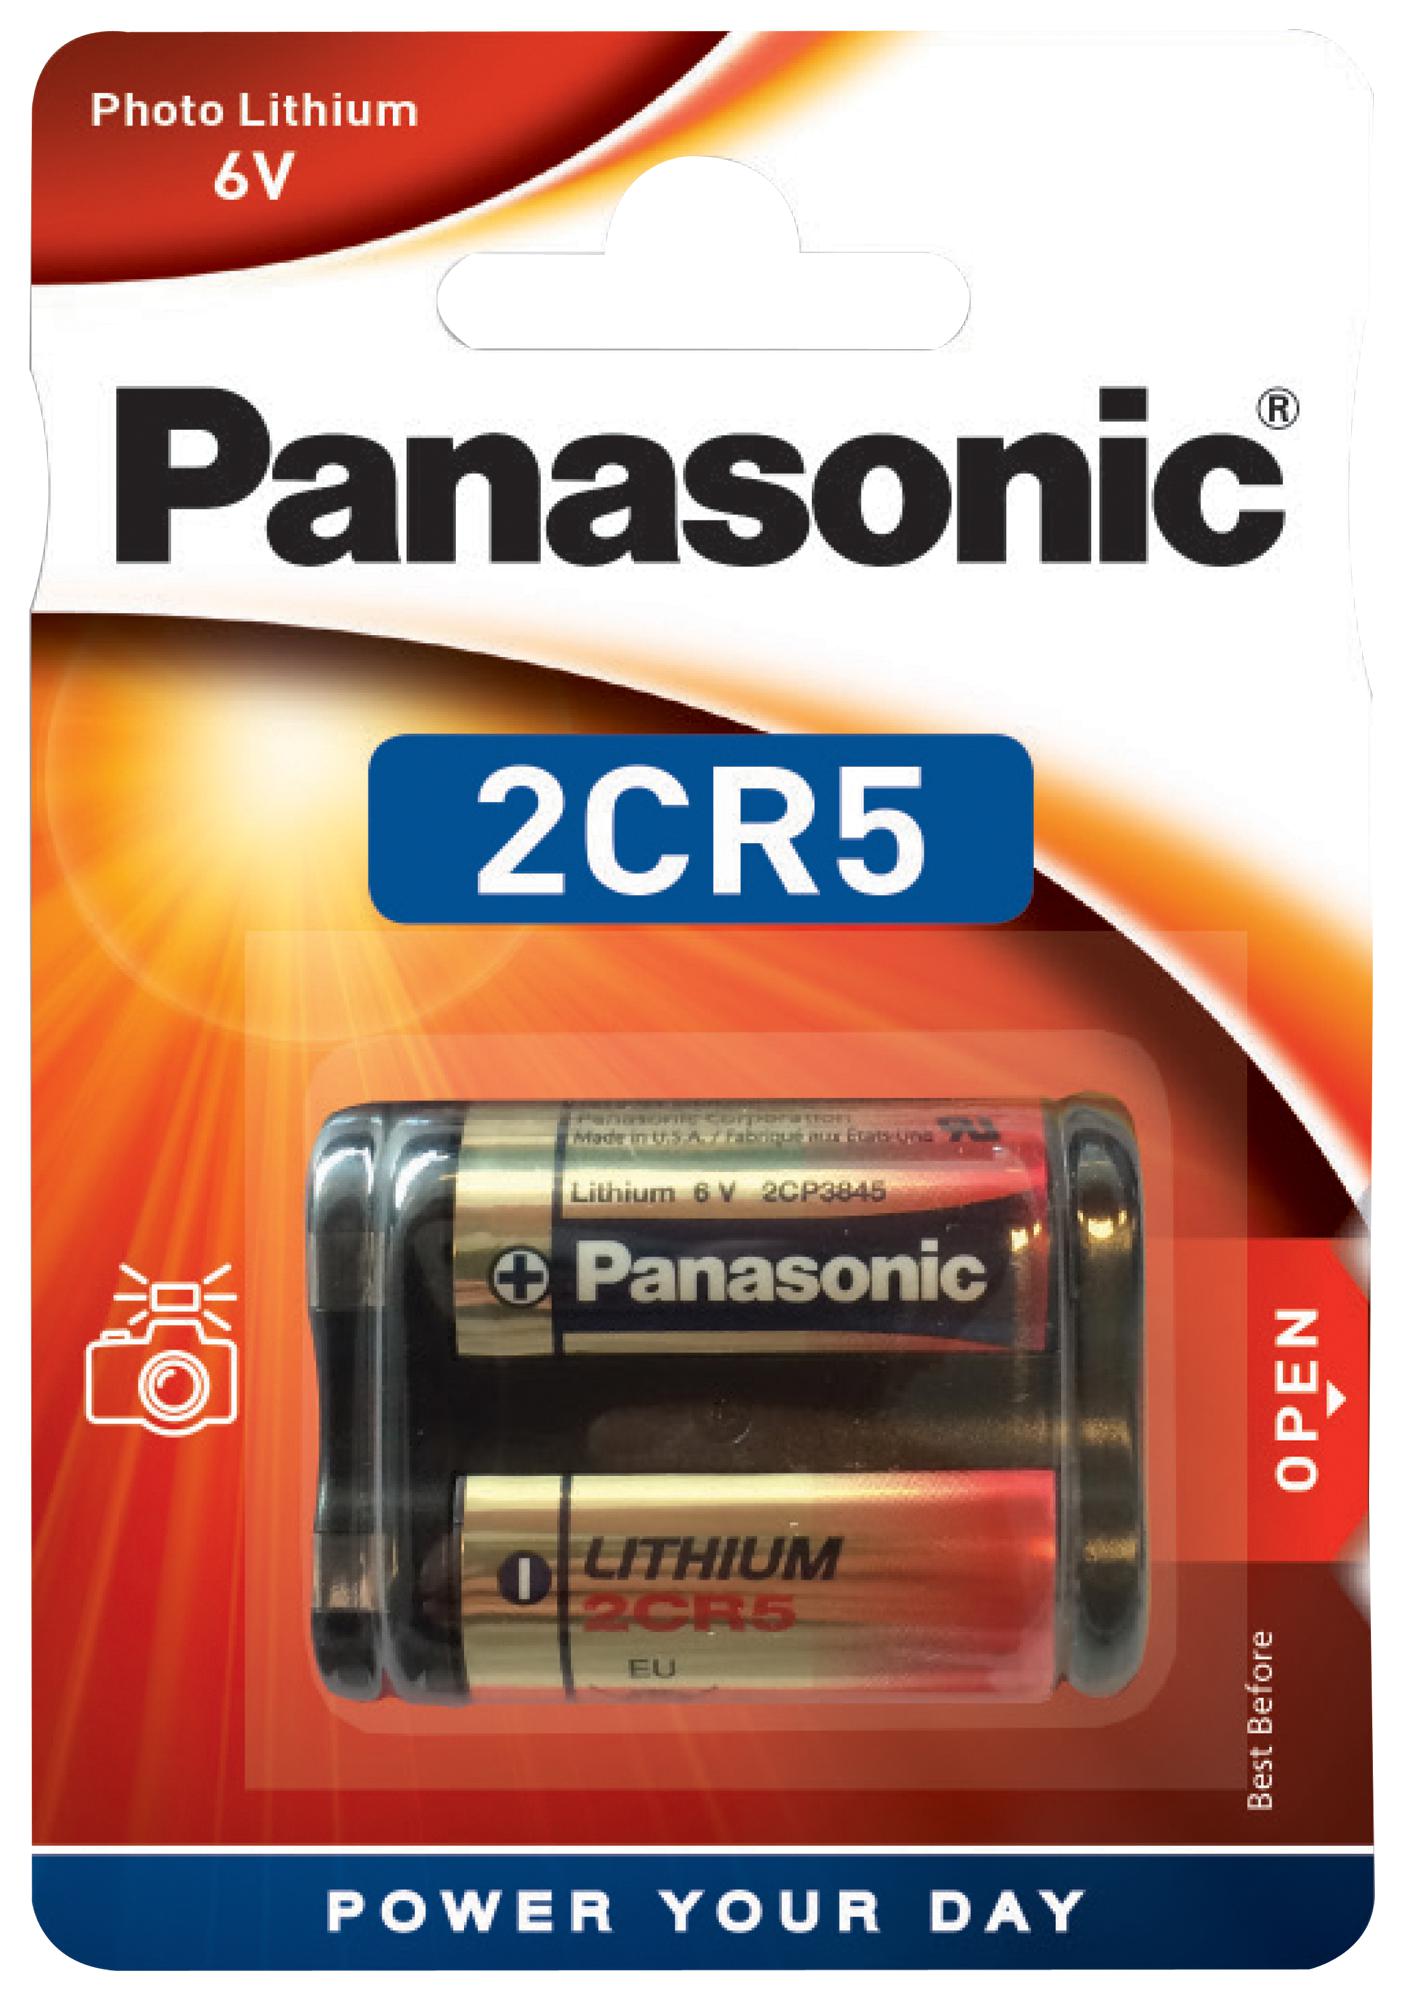 Panasonic 2Cr-5L/1Bp Battery, Lithium Manganese Dioxide, 6V